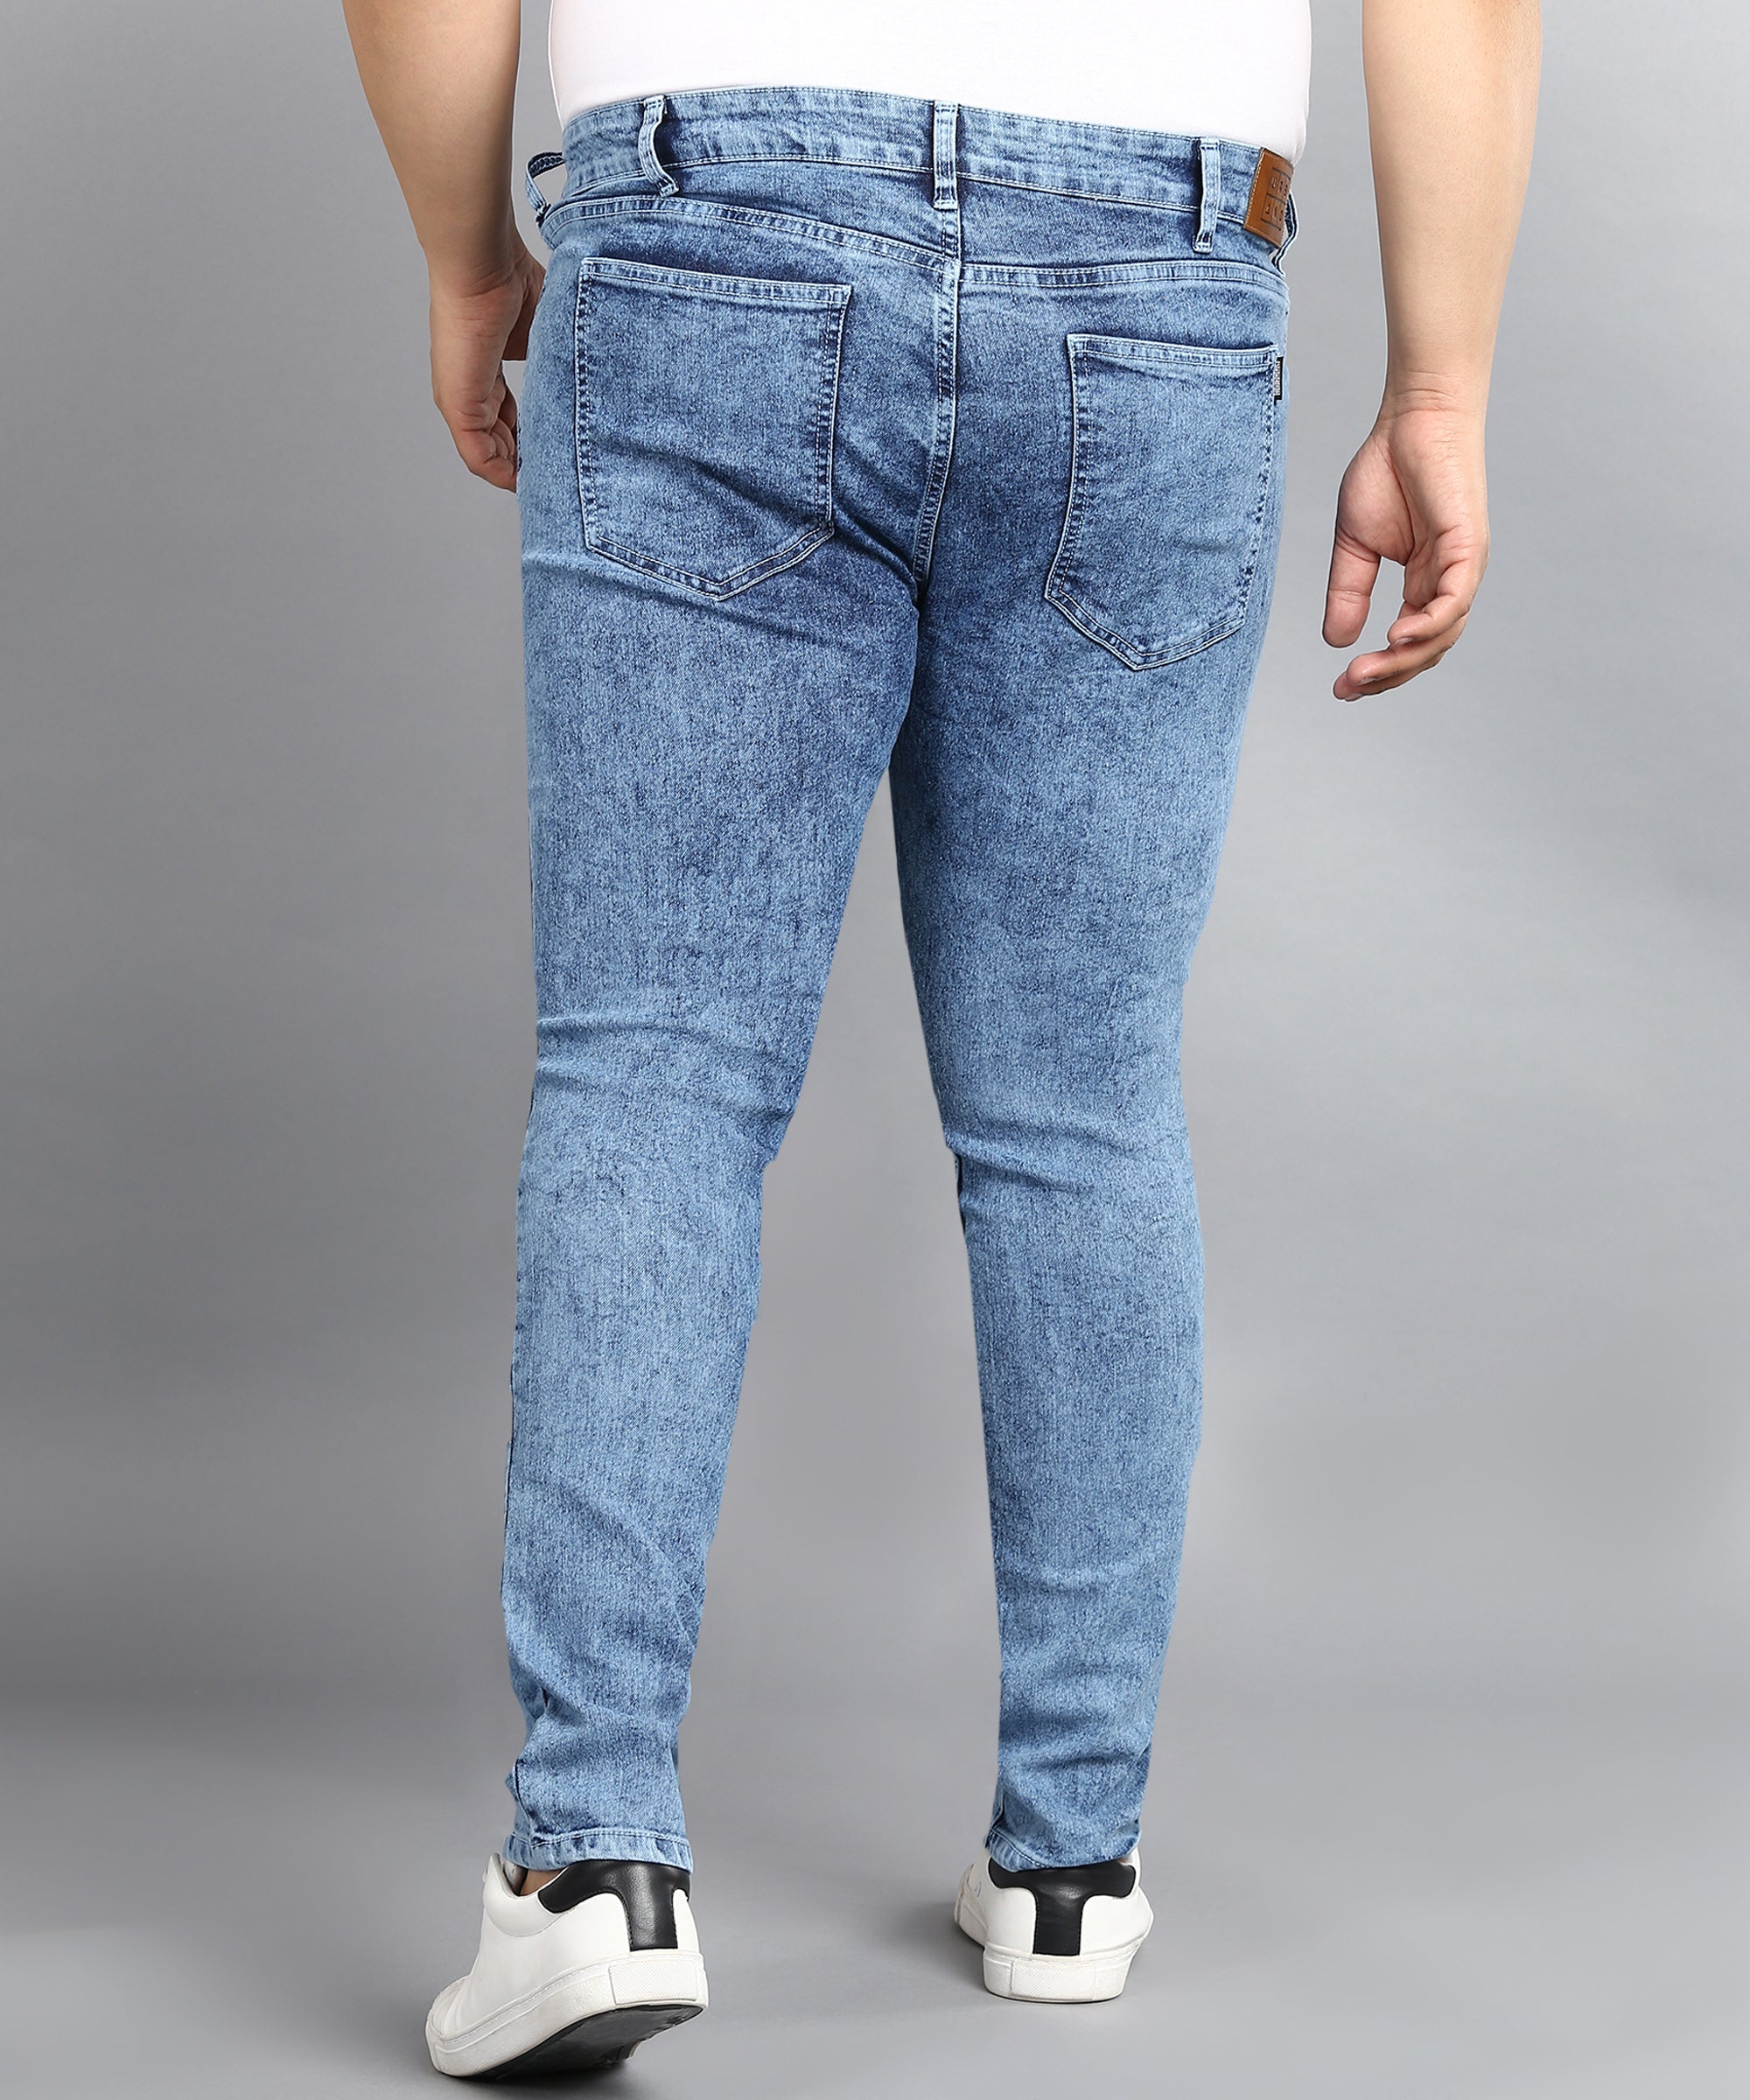 Urbano Plus Men's Light Blue Regular Fit Washed Jeans Stretchable